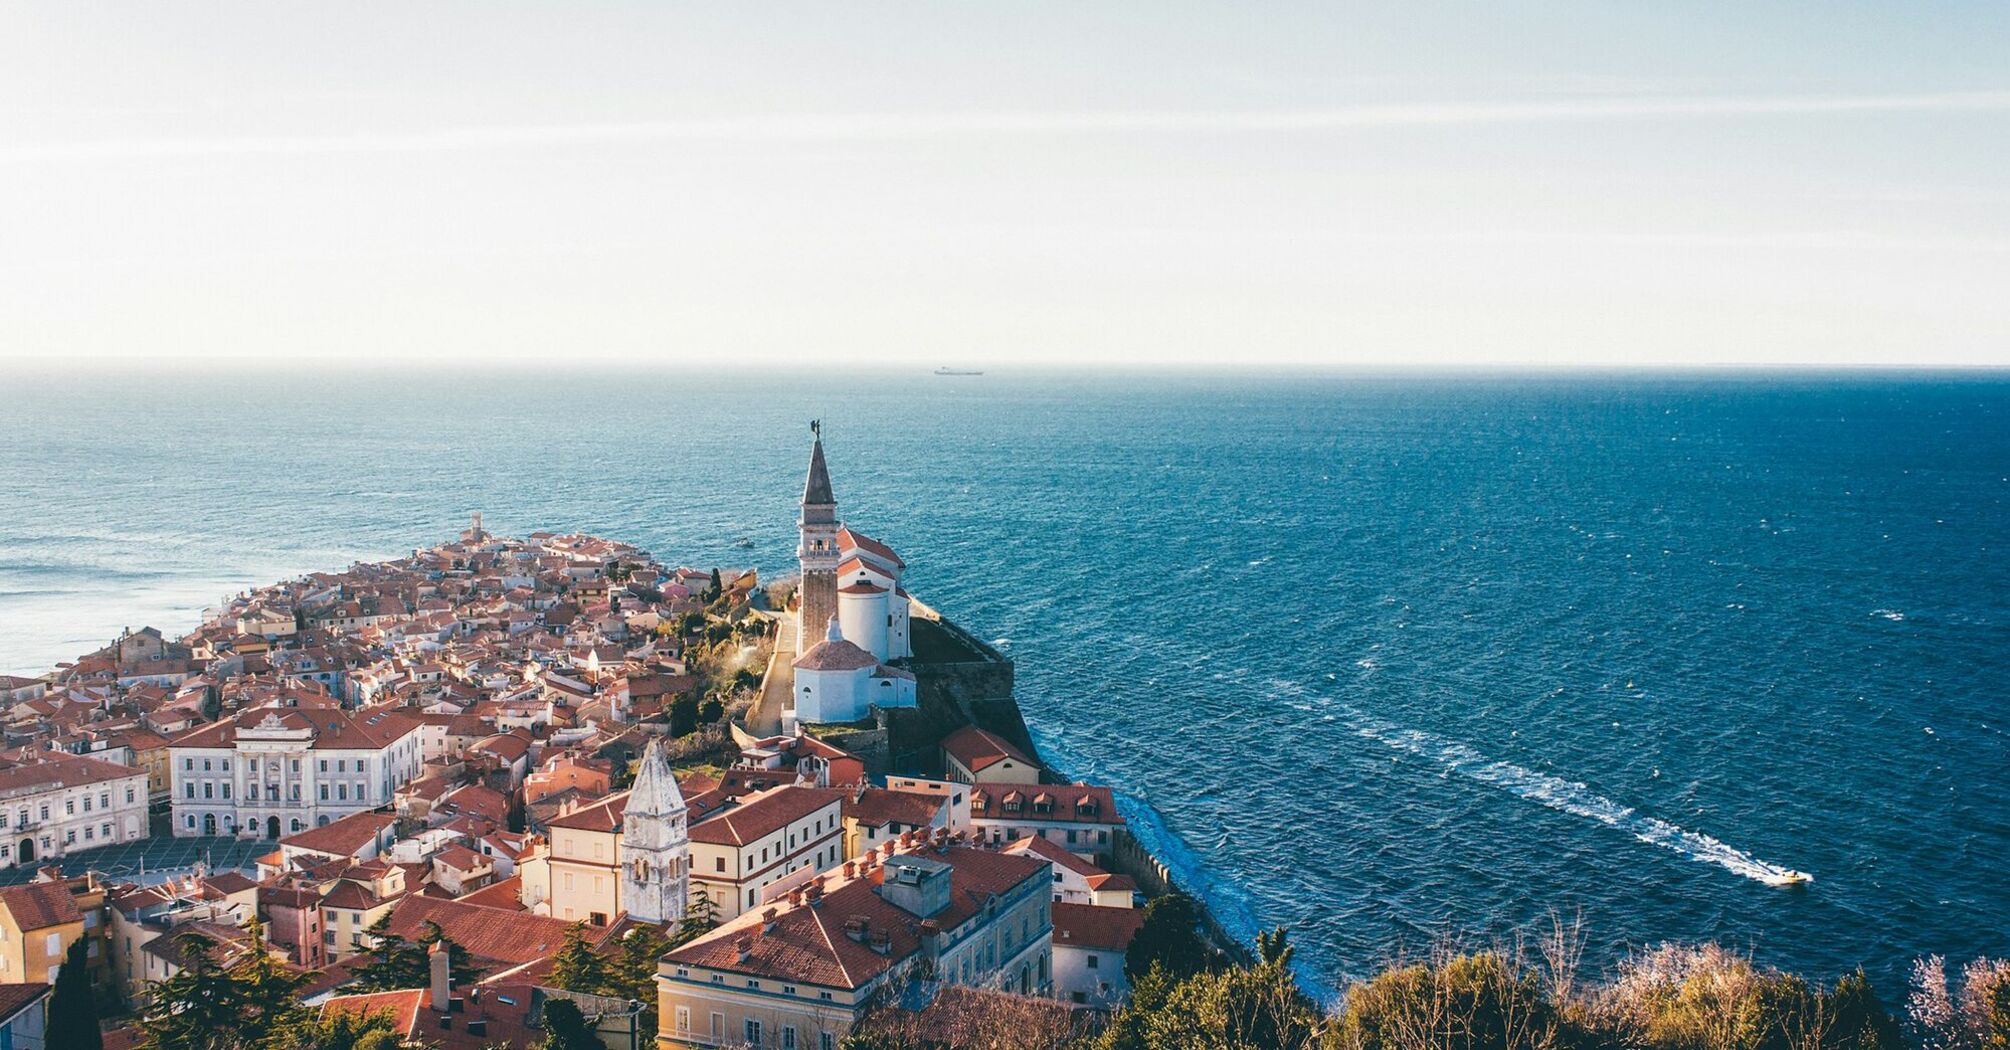 Slovenian coastal town overlooking the Adriatic Sea